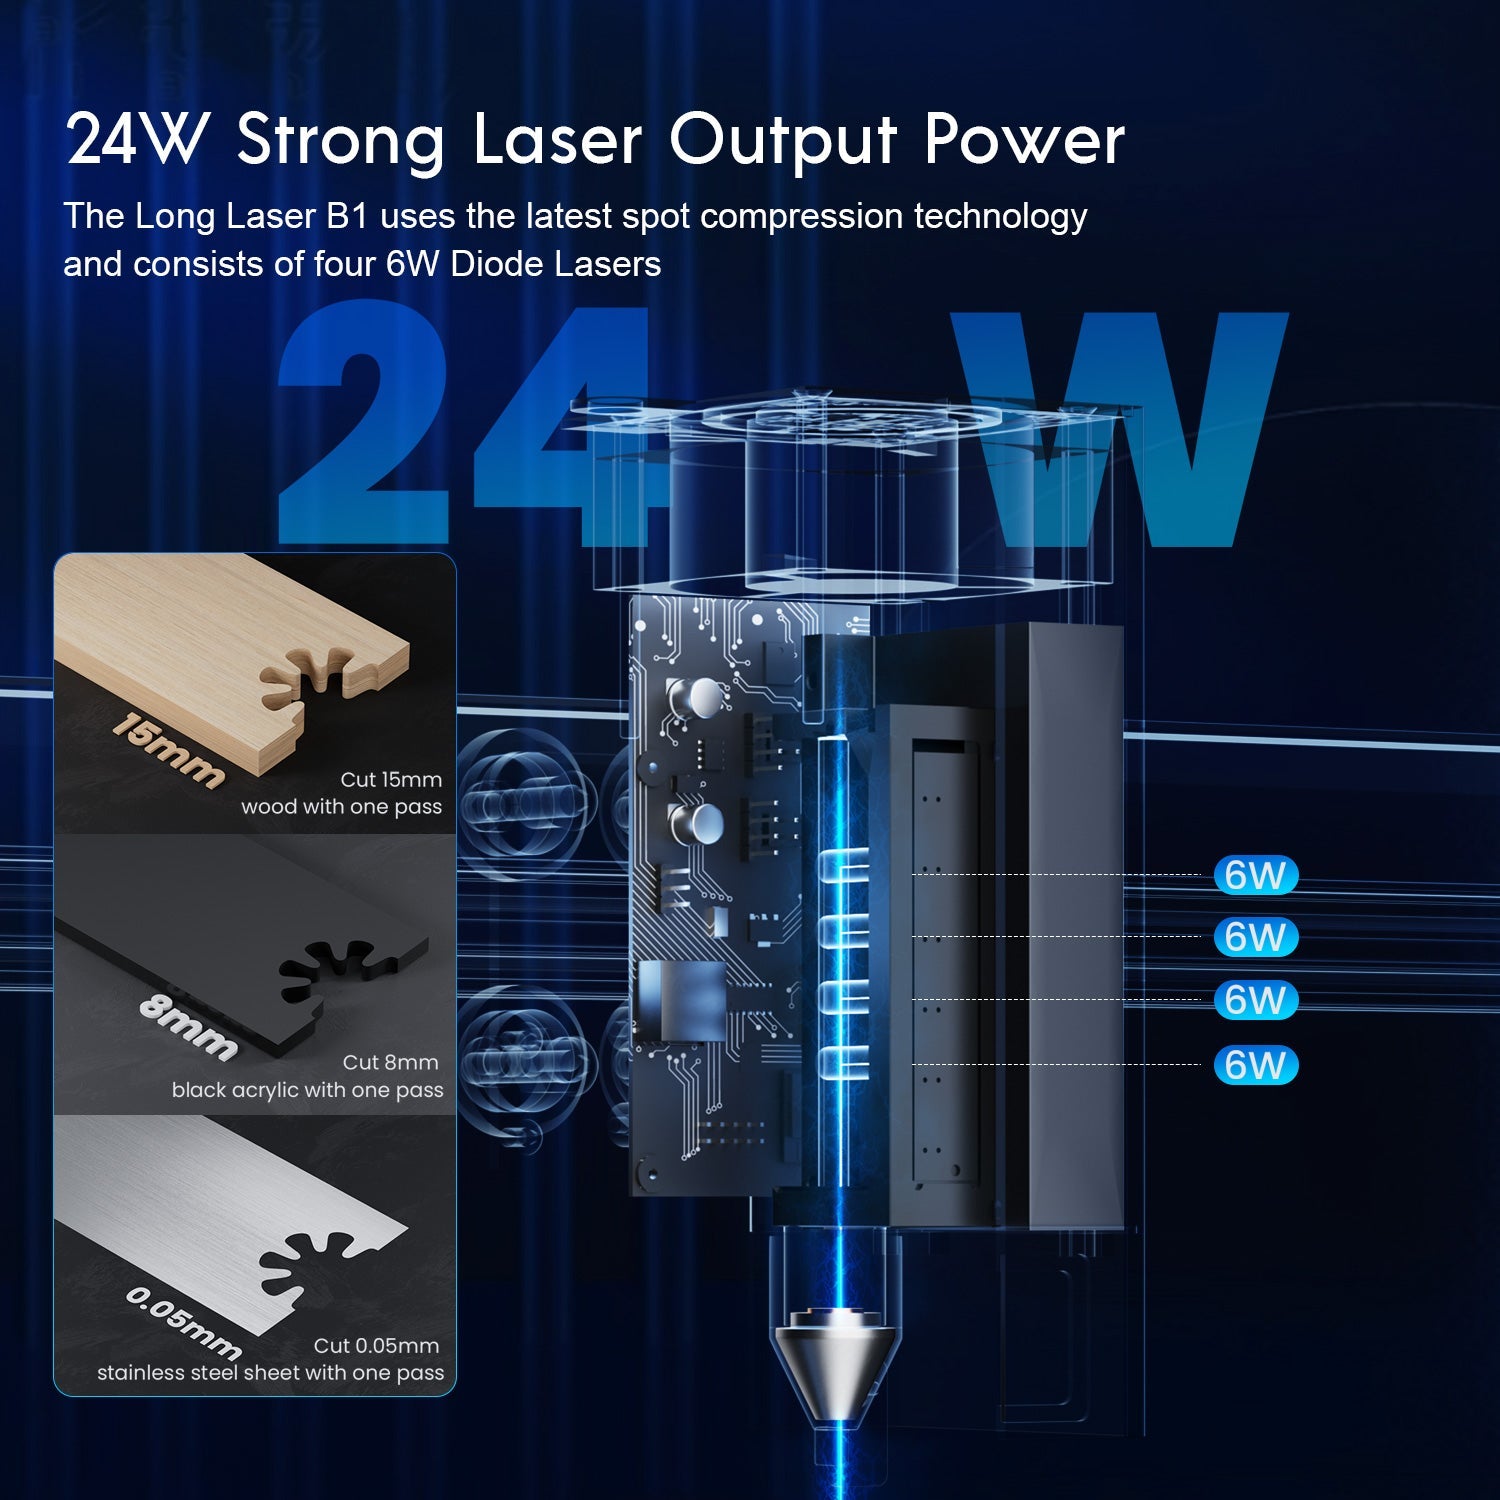 Longer Laser B1 20W Engraving Machine(22 - 24W Output Power) - LONGER